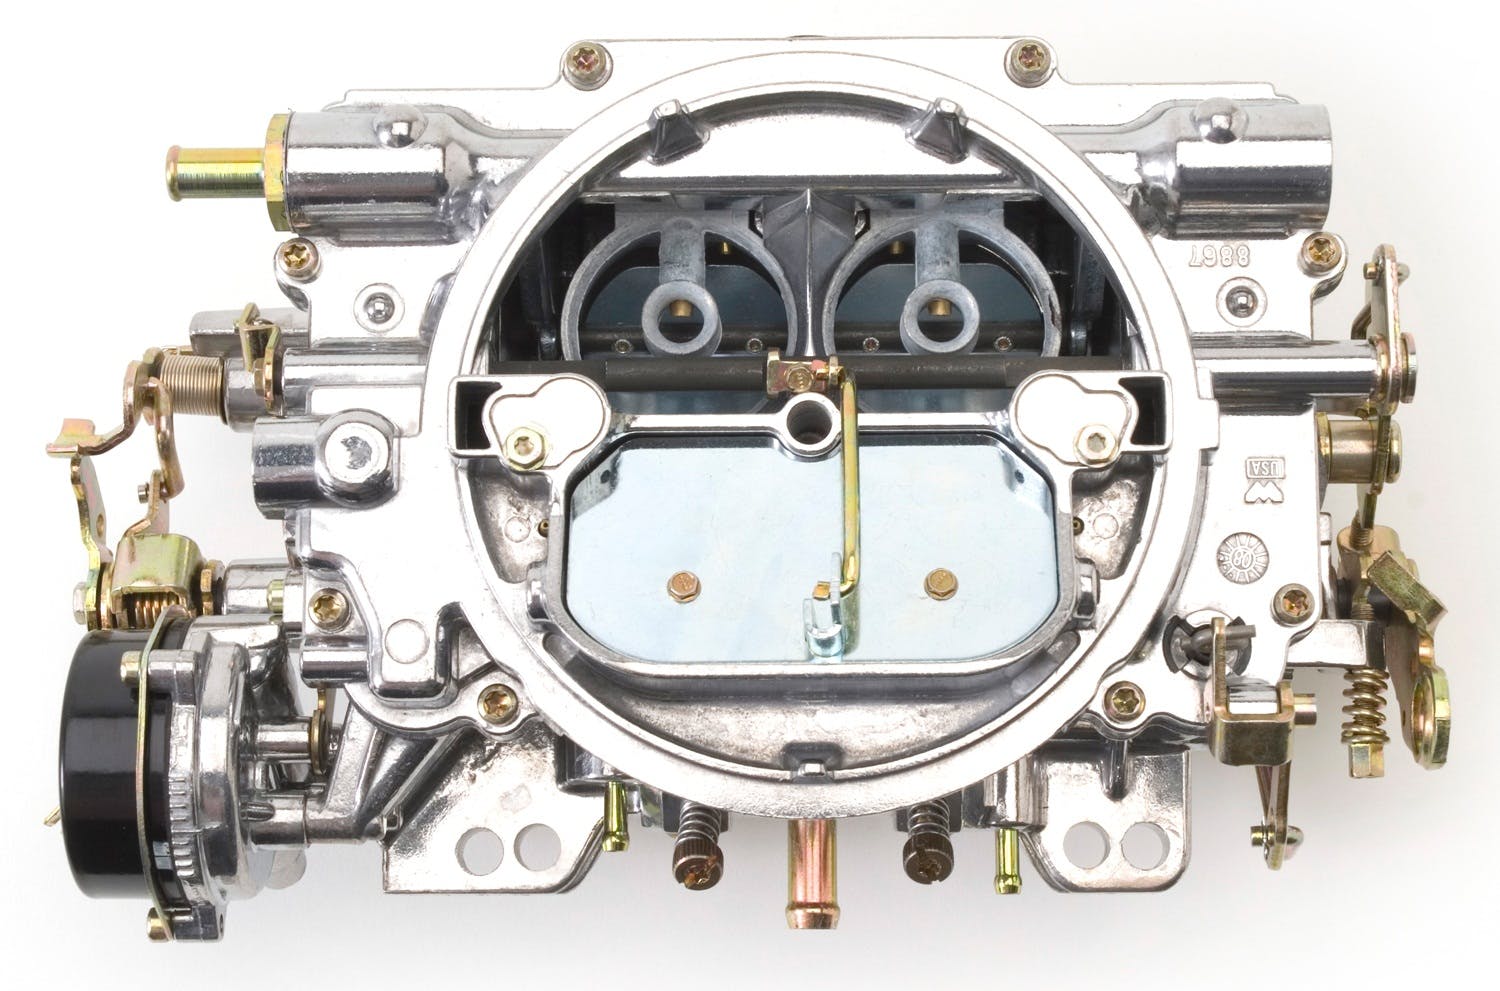 Edelbrock 1403 Performer Series 500 CFM Carburetor with Electric Choke in Satin (non-EGR)